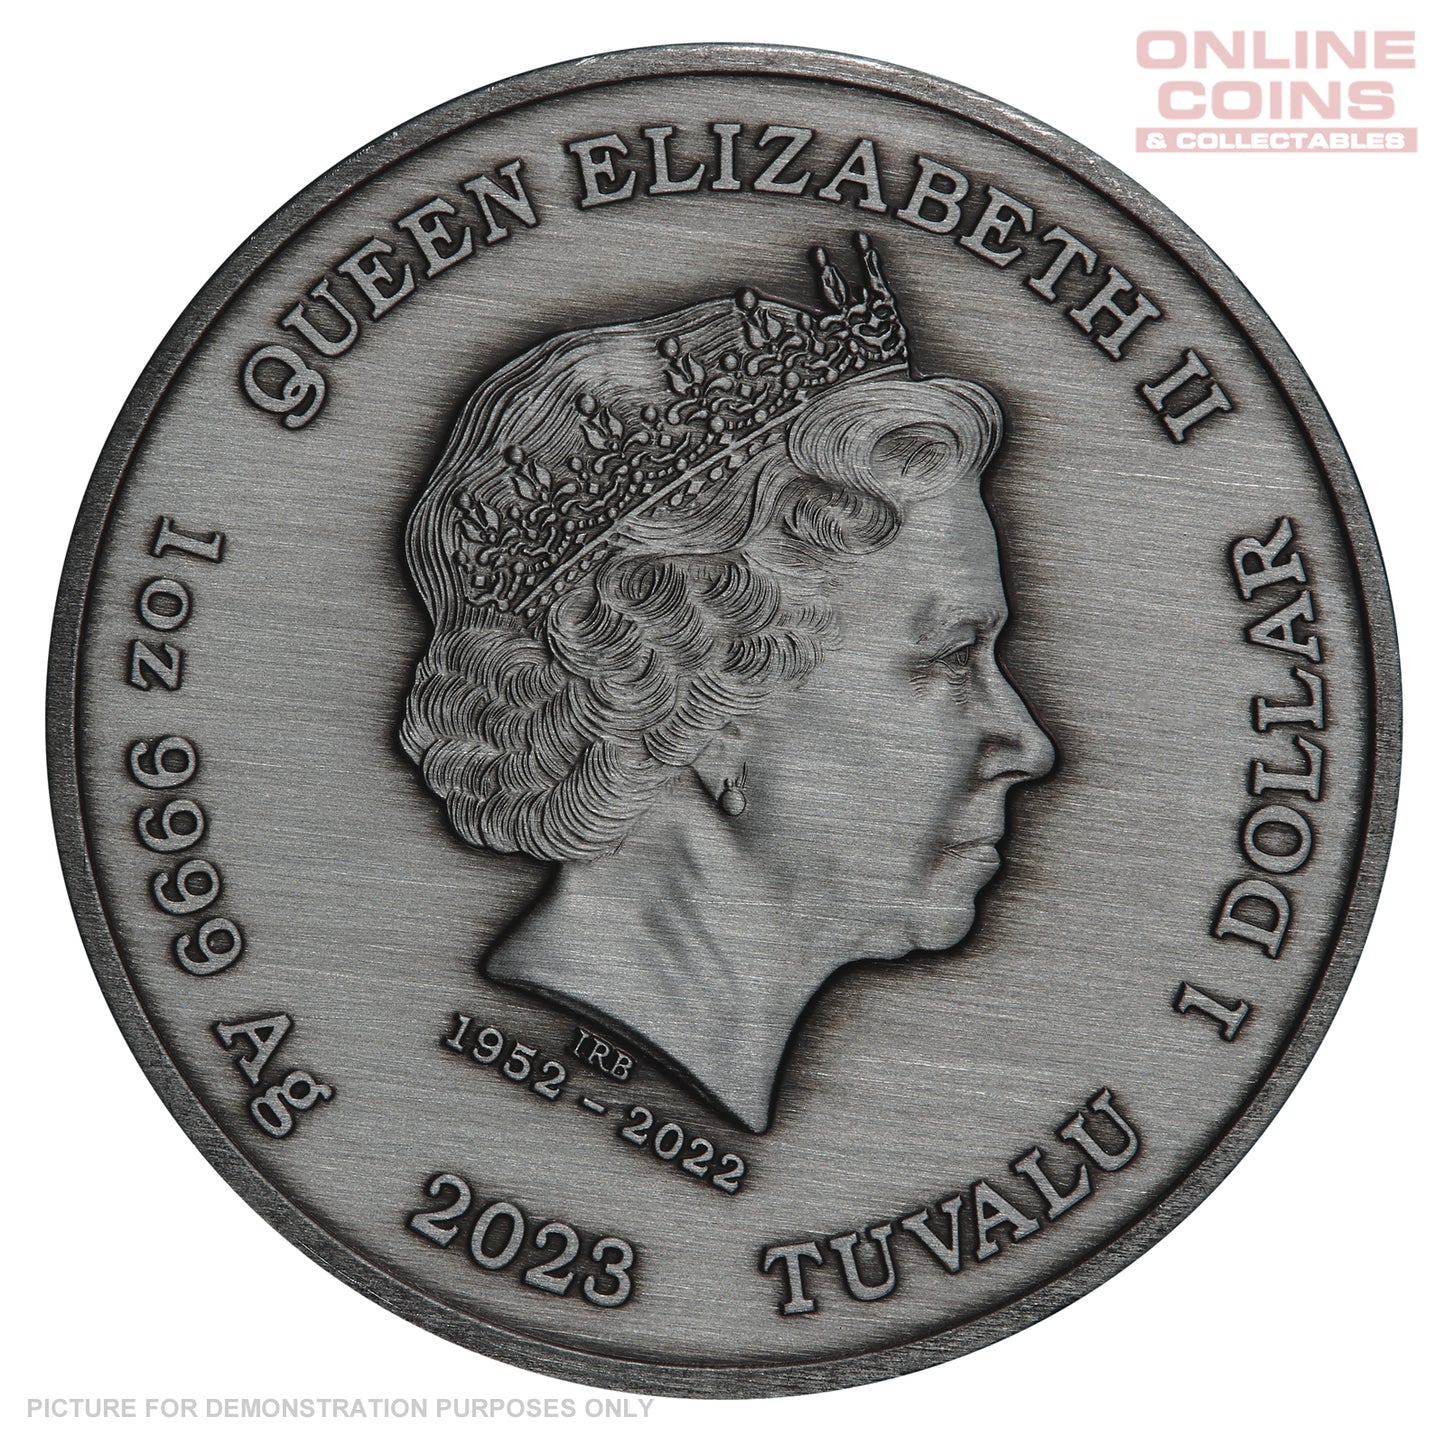 2023 Perth Mint 1oz Silver Anitqued Coloured Coin - James Bond Casino Royale - Casino Chip